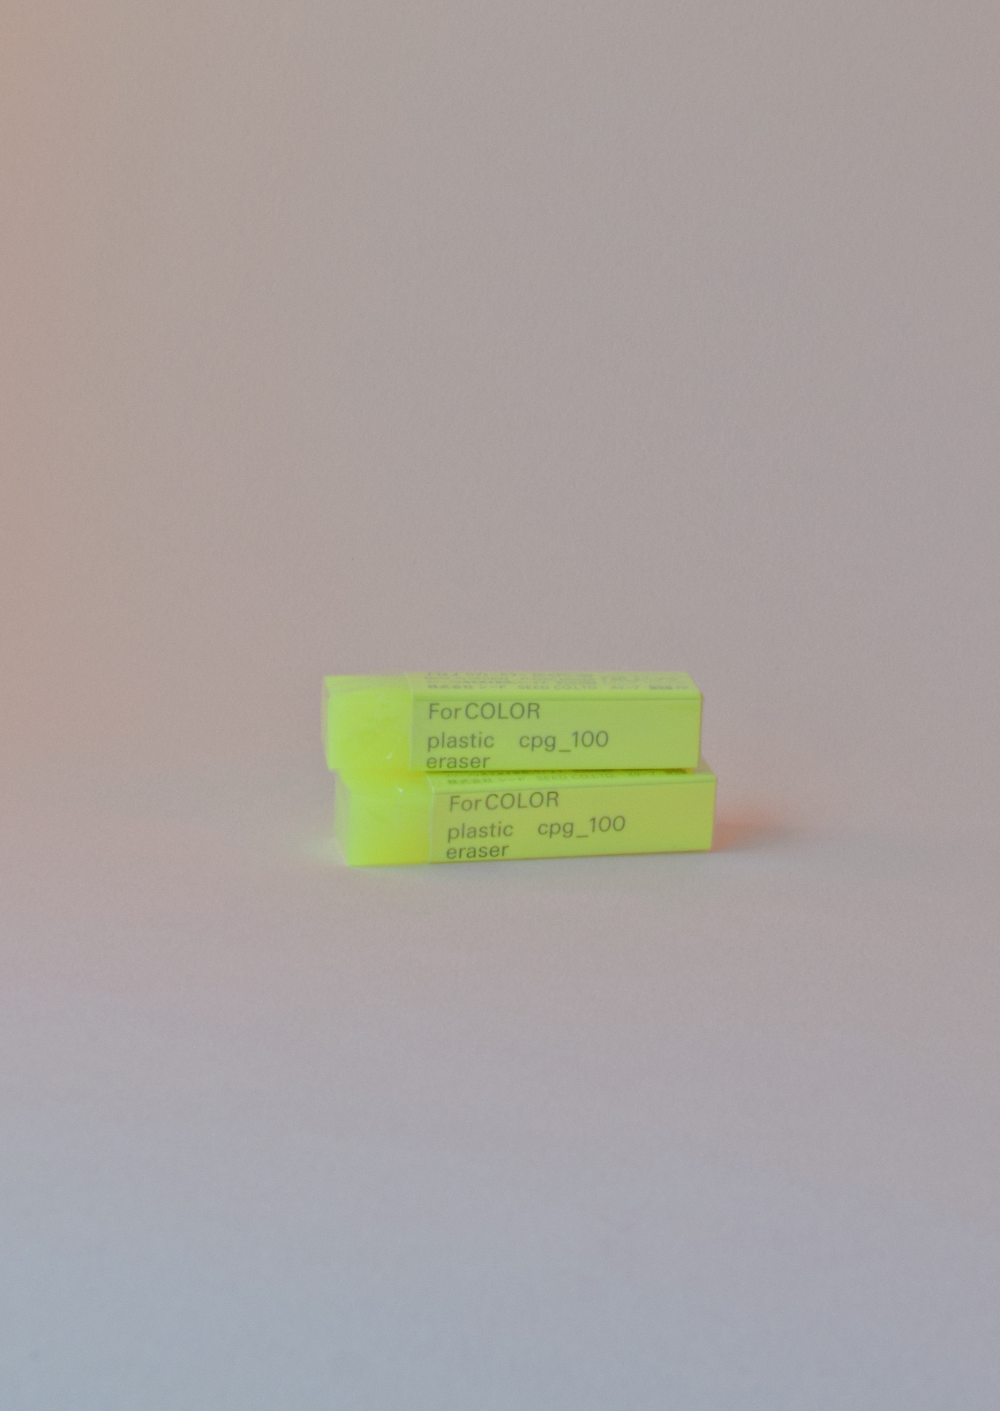 Forcolor Neon Yellow Eraser